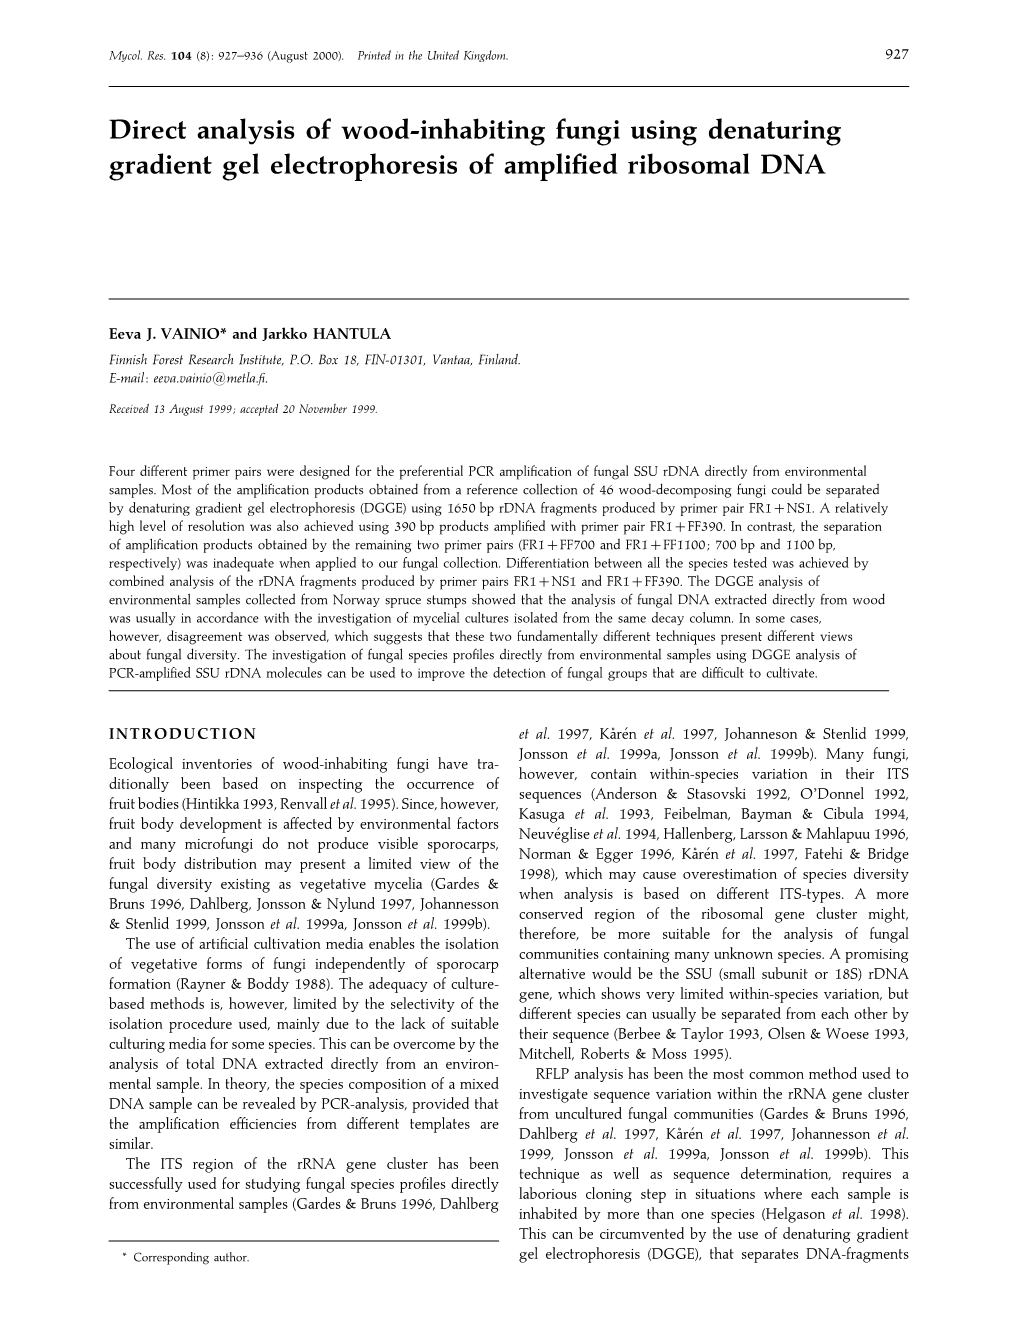 Direct Analysis of Wood-Inhabiting Fungi Using Denaturing Gradient Gel Electrophoresis of Ampliﬁed Ribosomal DNA